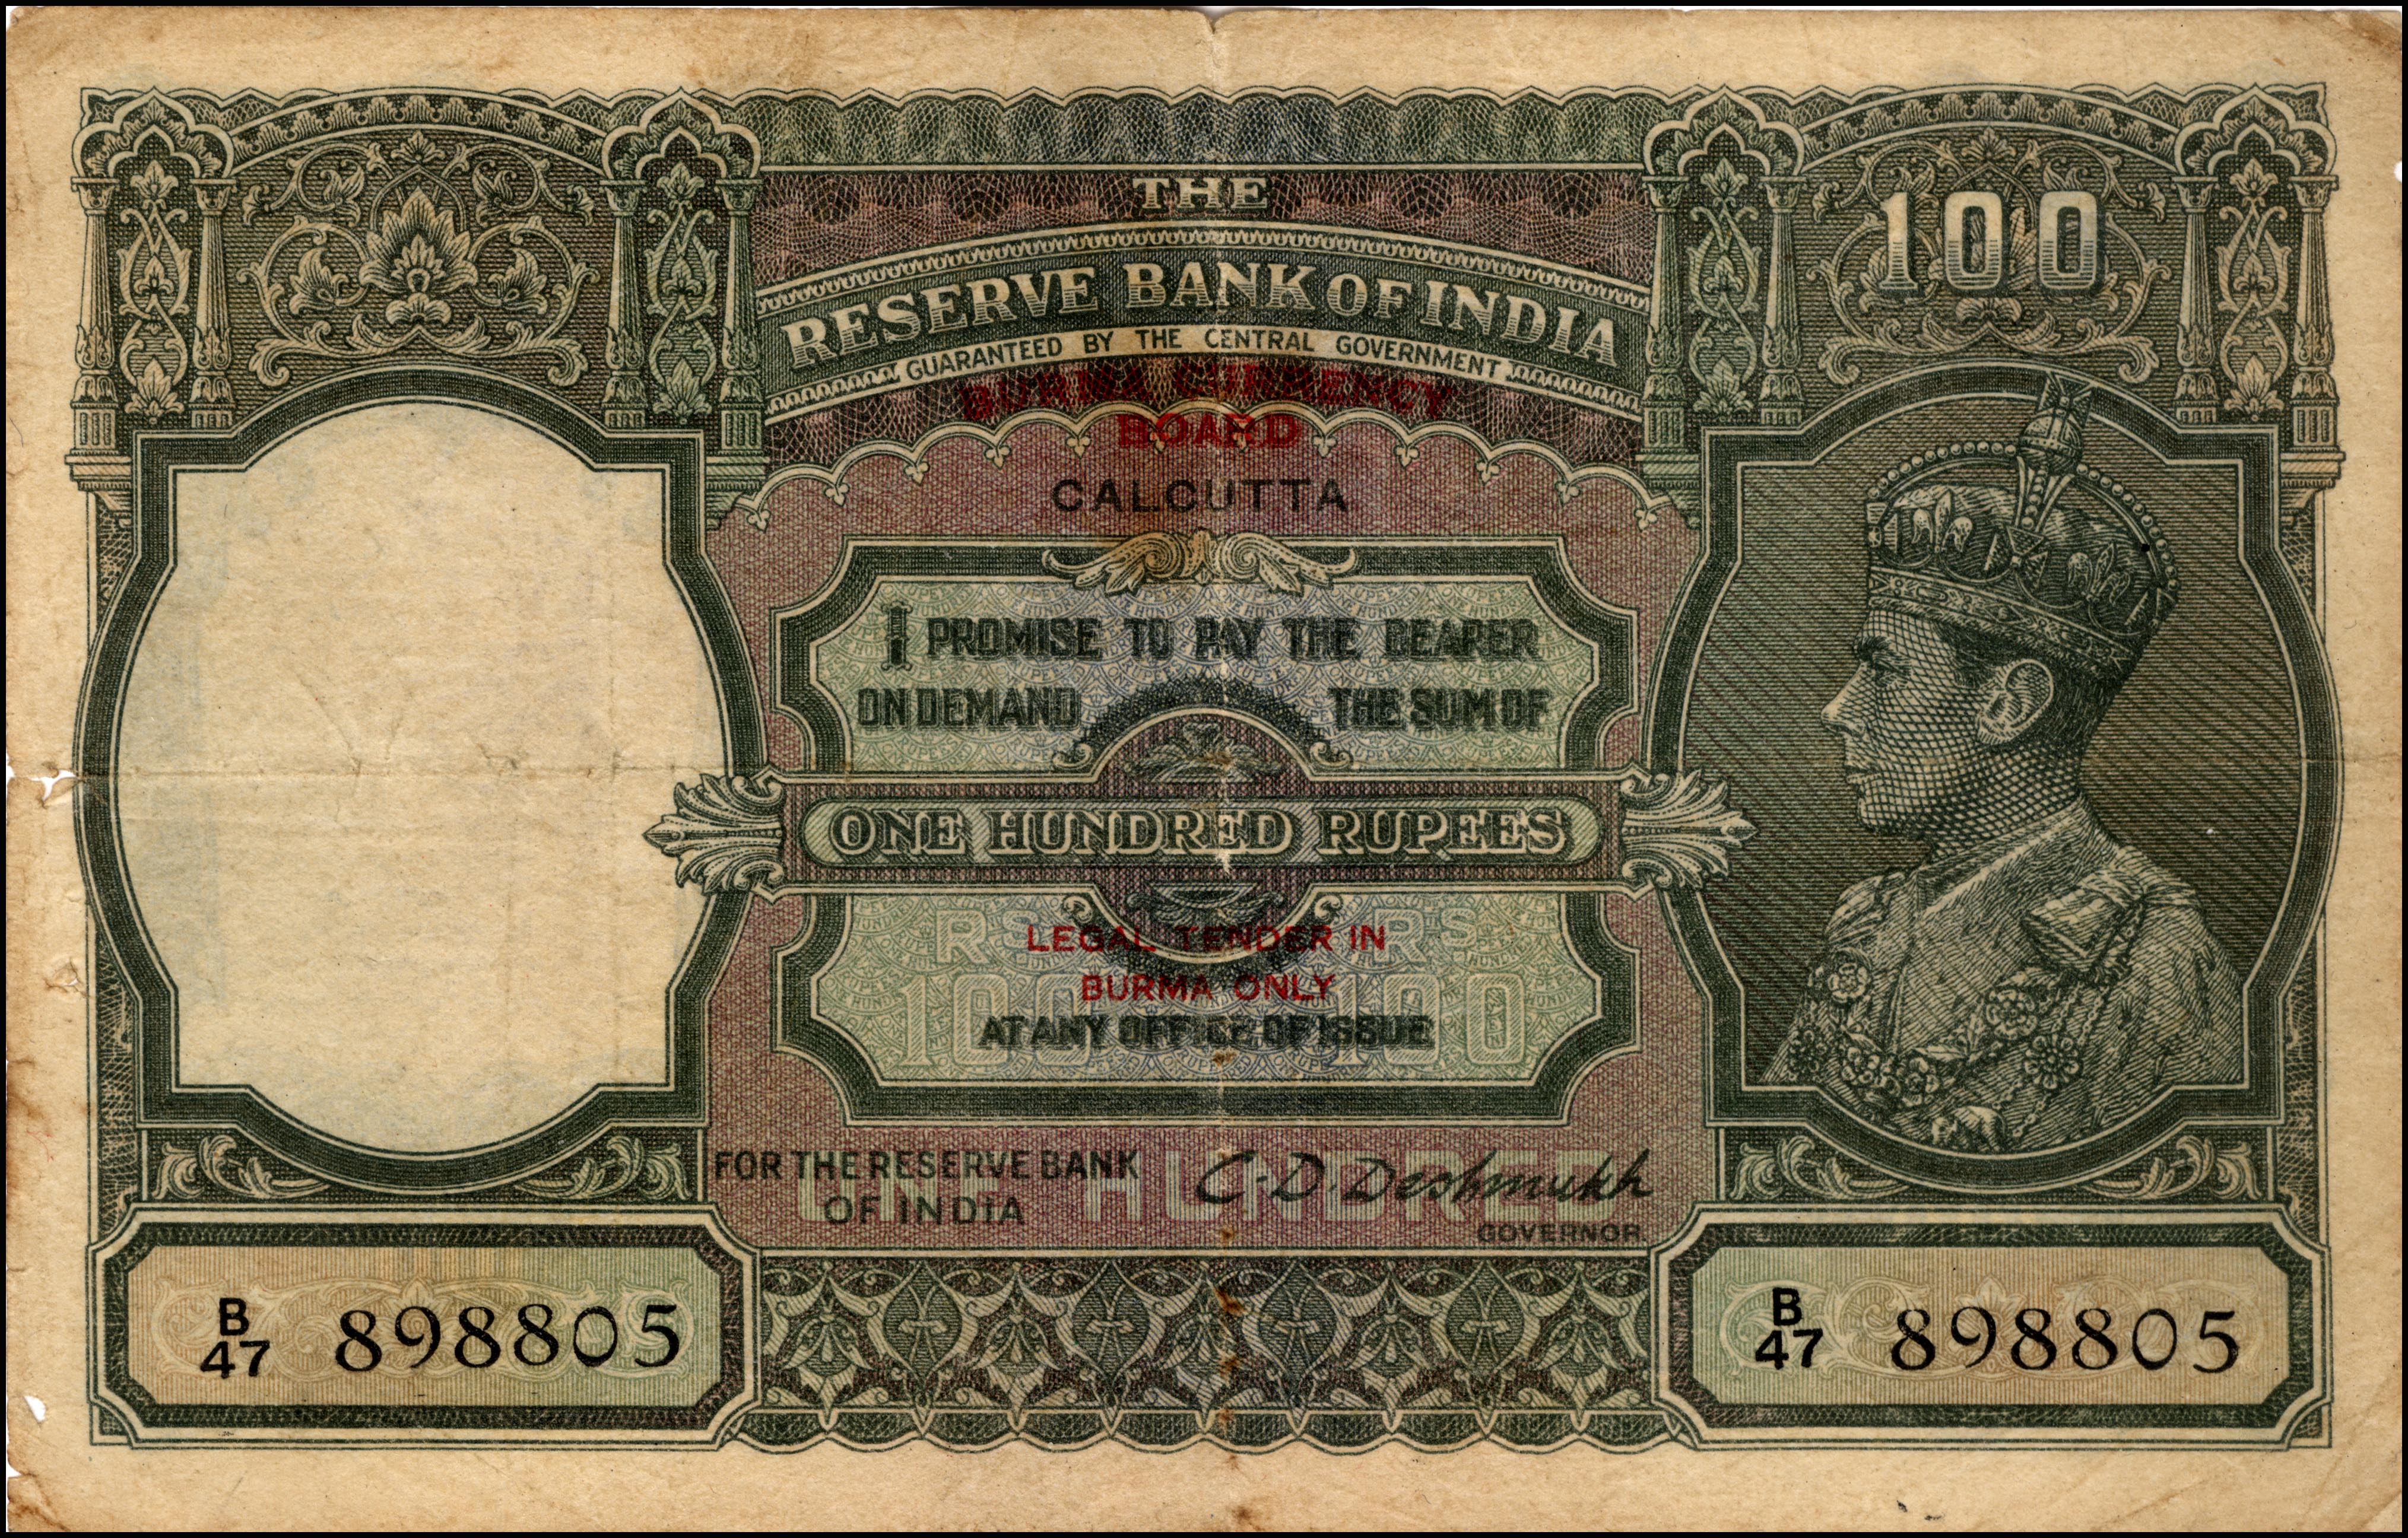 East India Company 100 Rupee Note - HD Wallpaper 